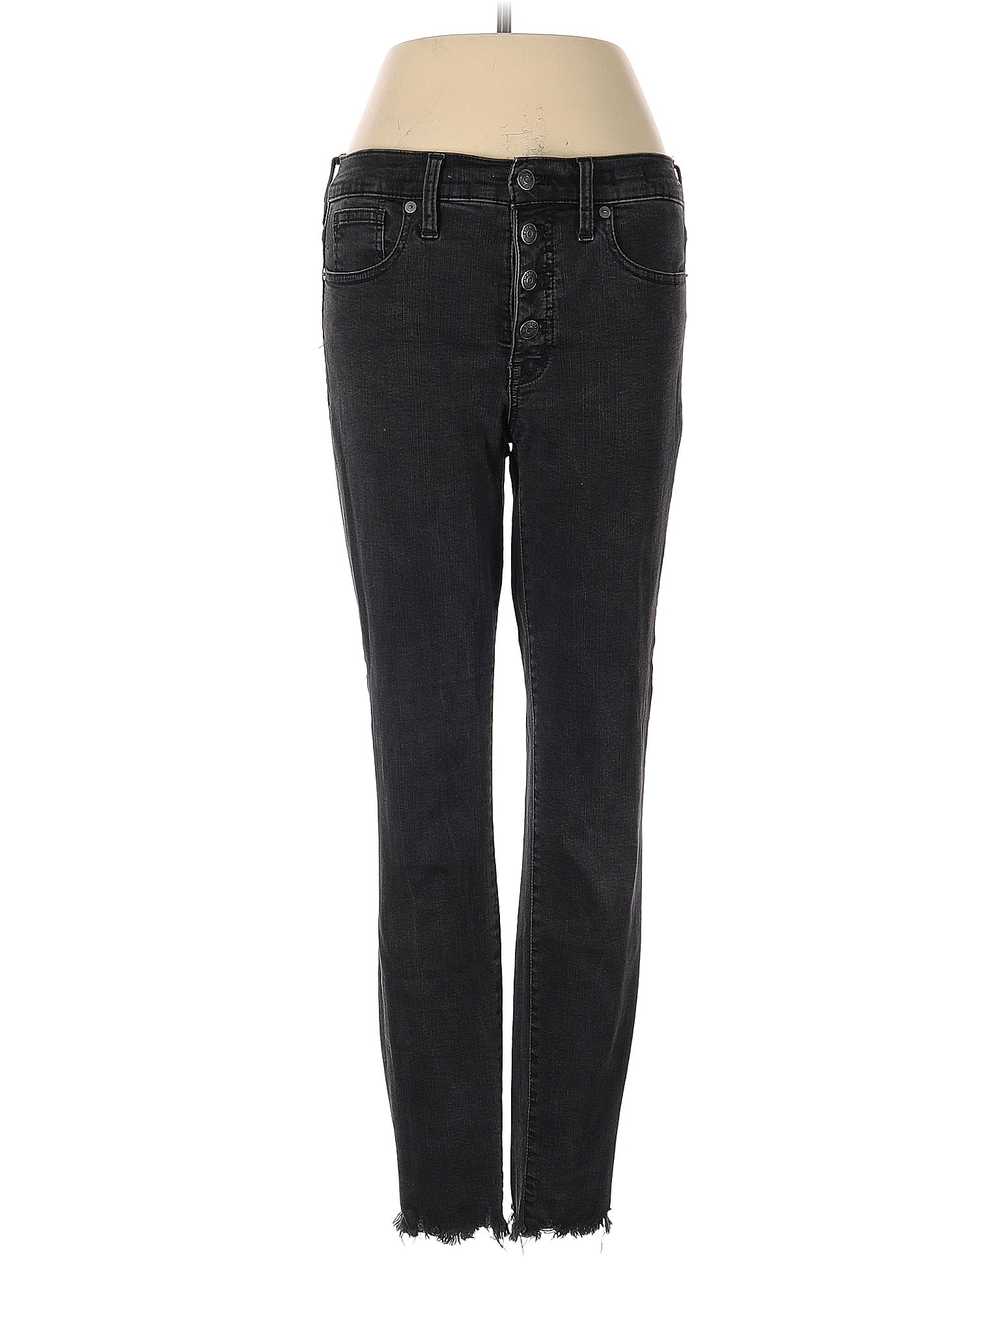 Madewell Women Black Jeans 28W - image 1